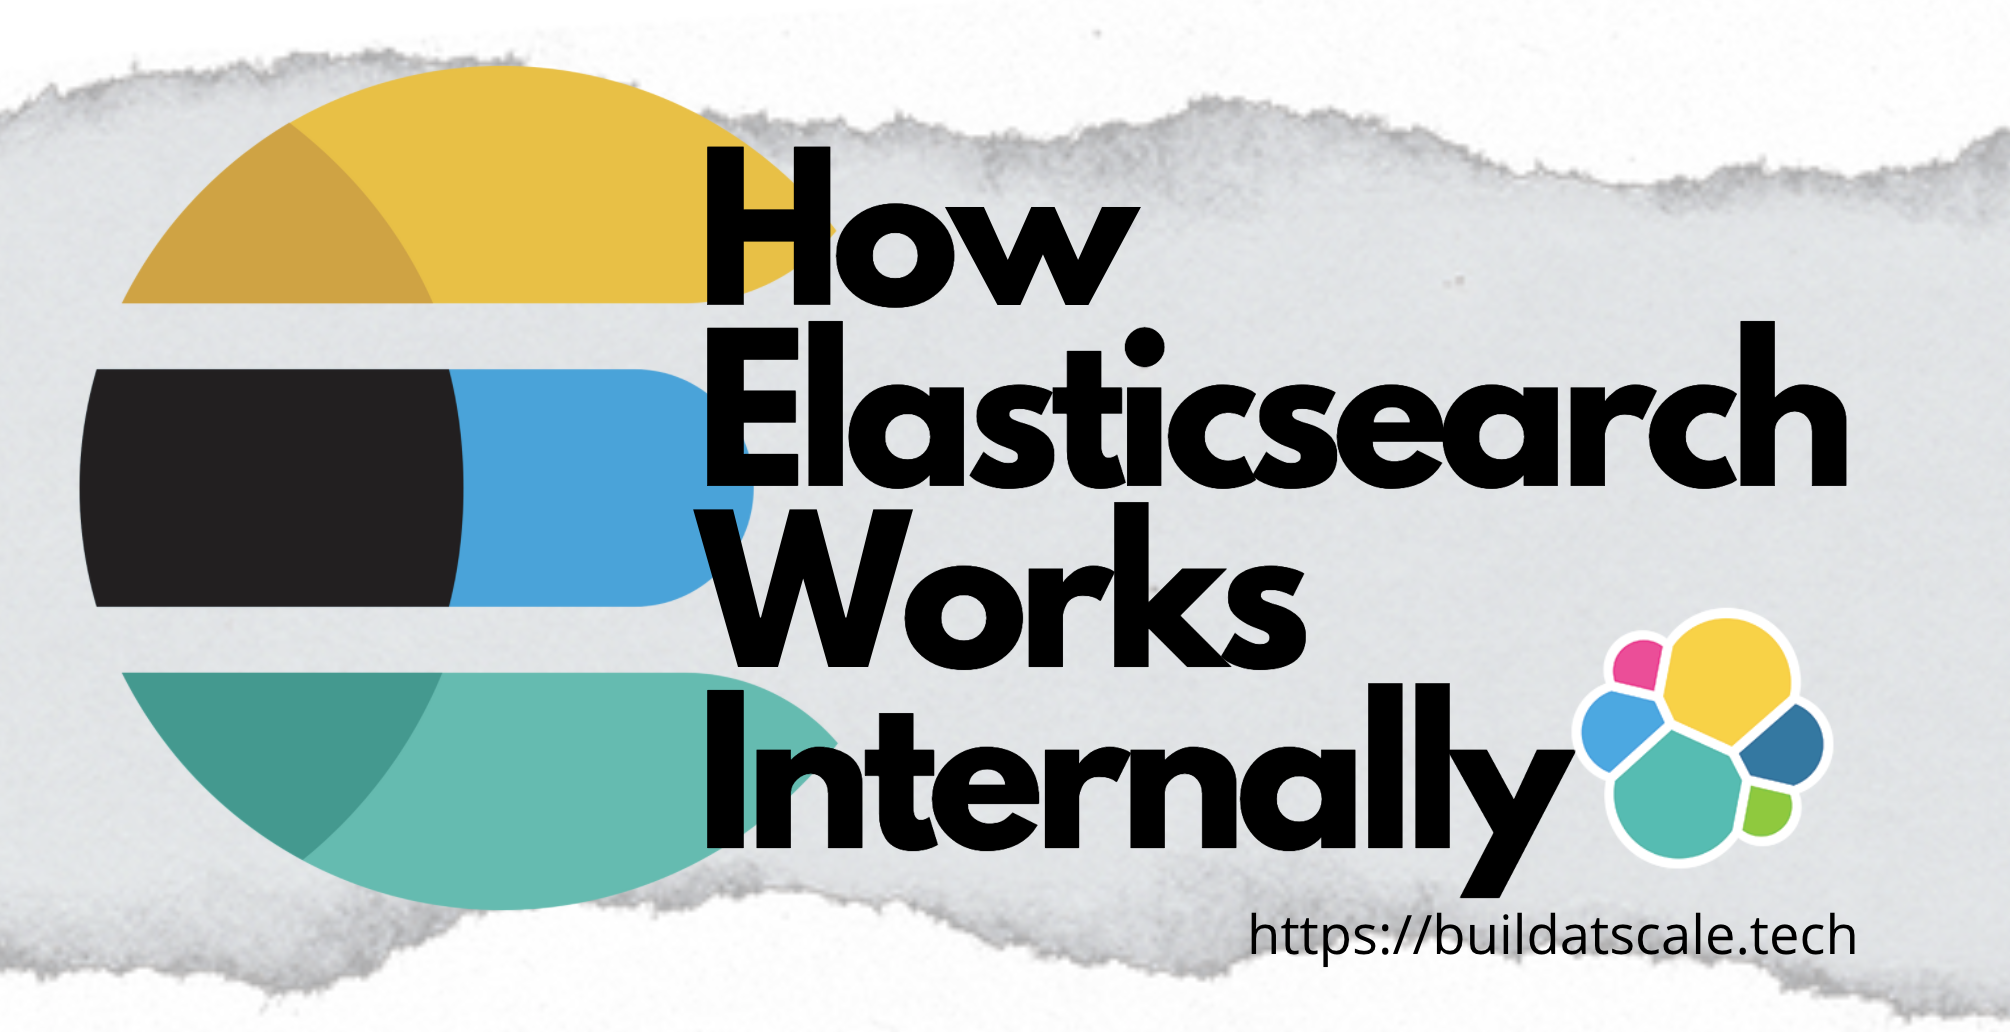 Part I: How Elasticsearch Works Internally